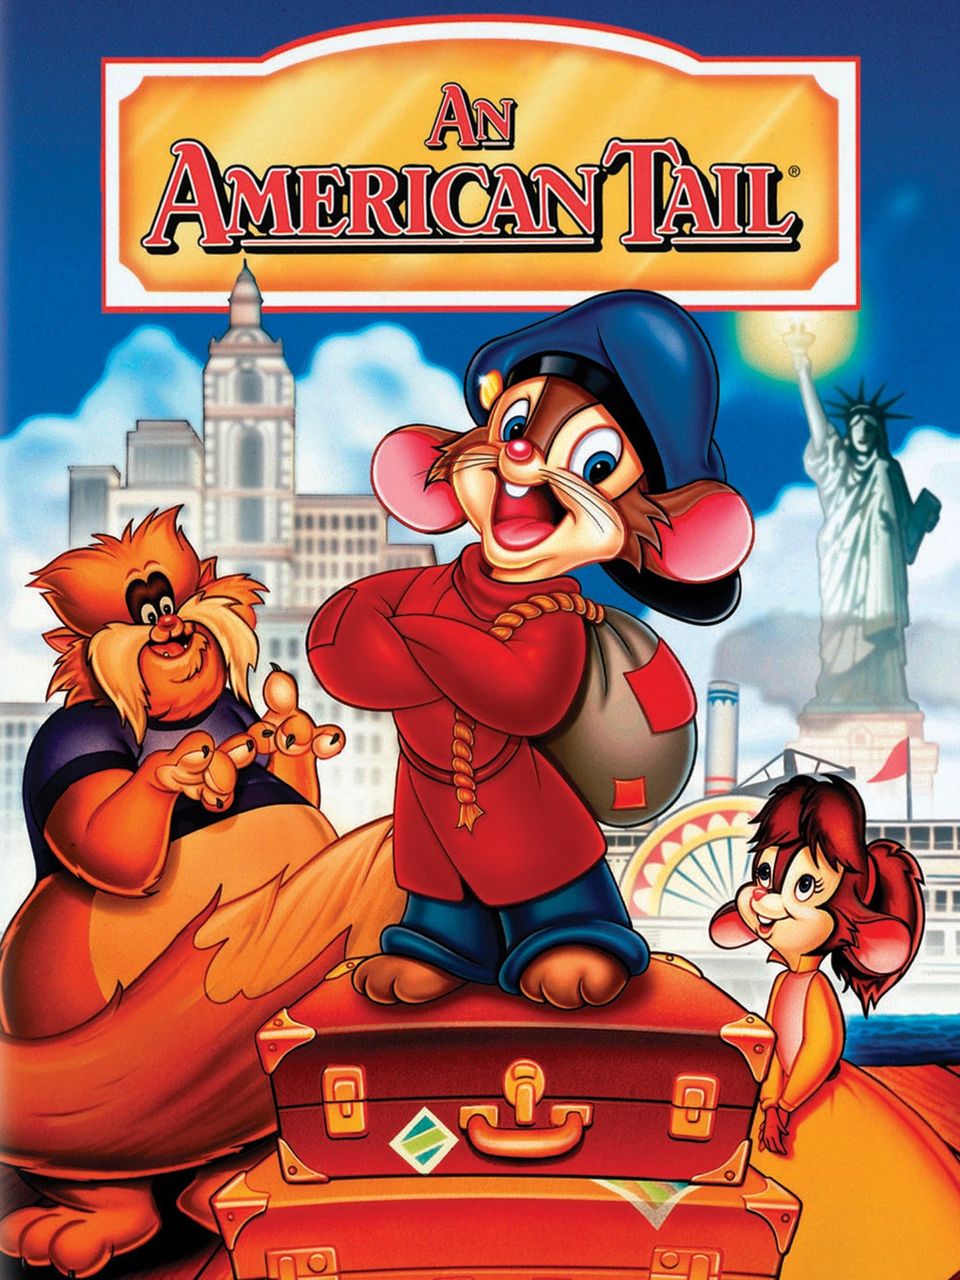 A Timeless Classic: บทวิจารณ์ภาพยนตร์เรื่อง "An American Tail"